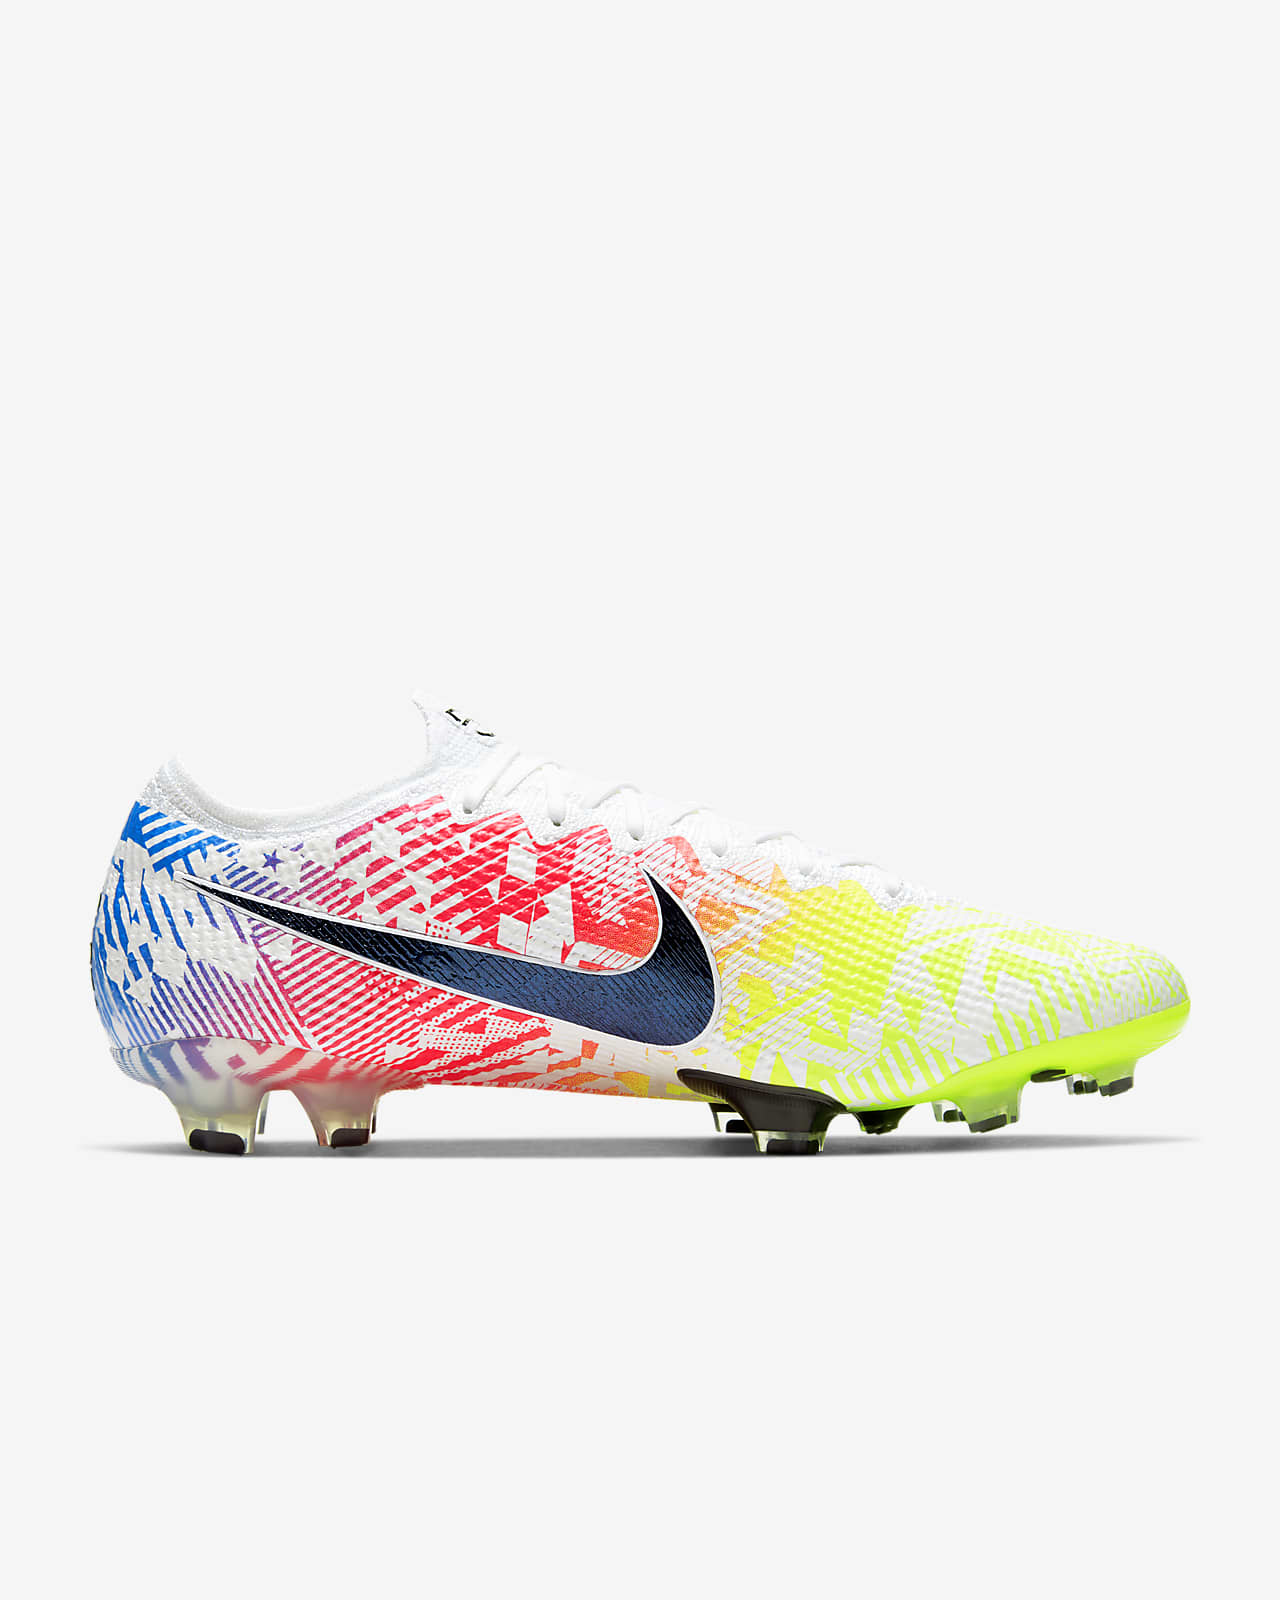 neymar latest boots